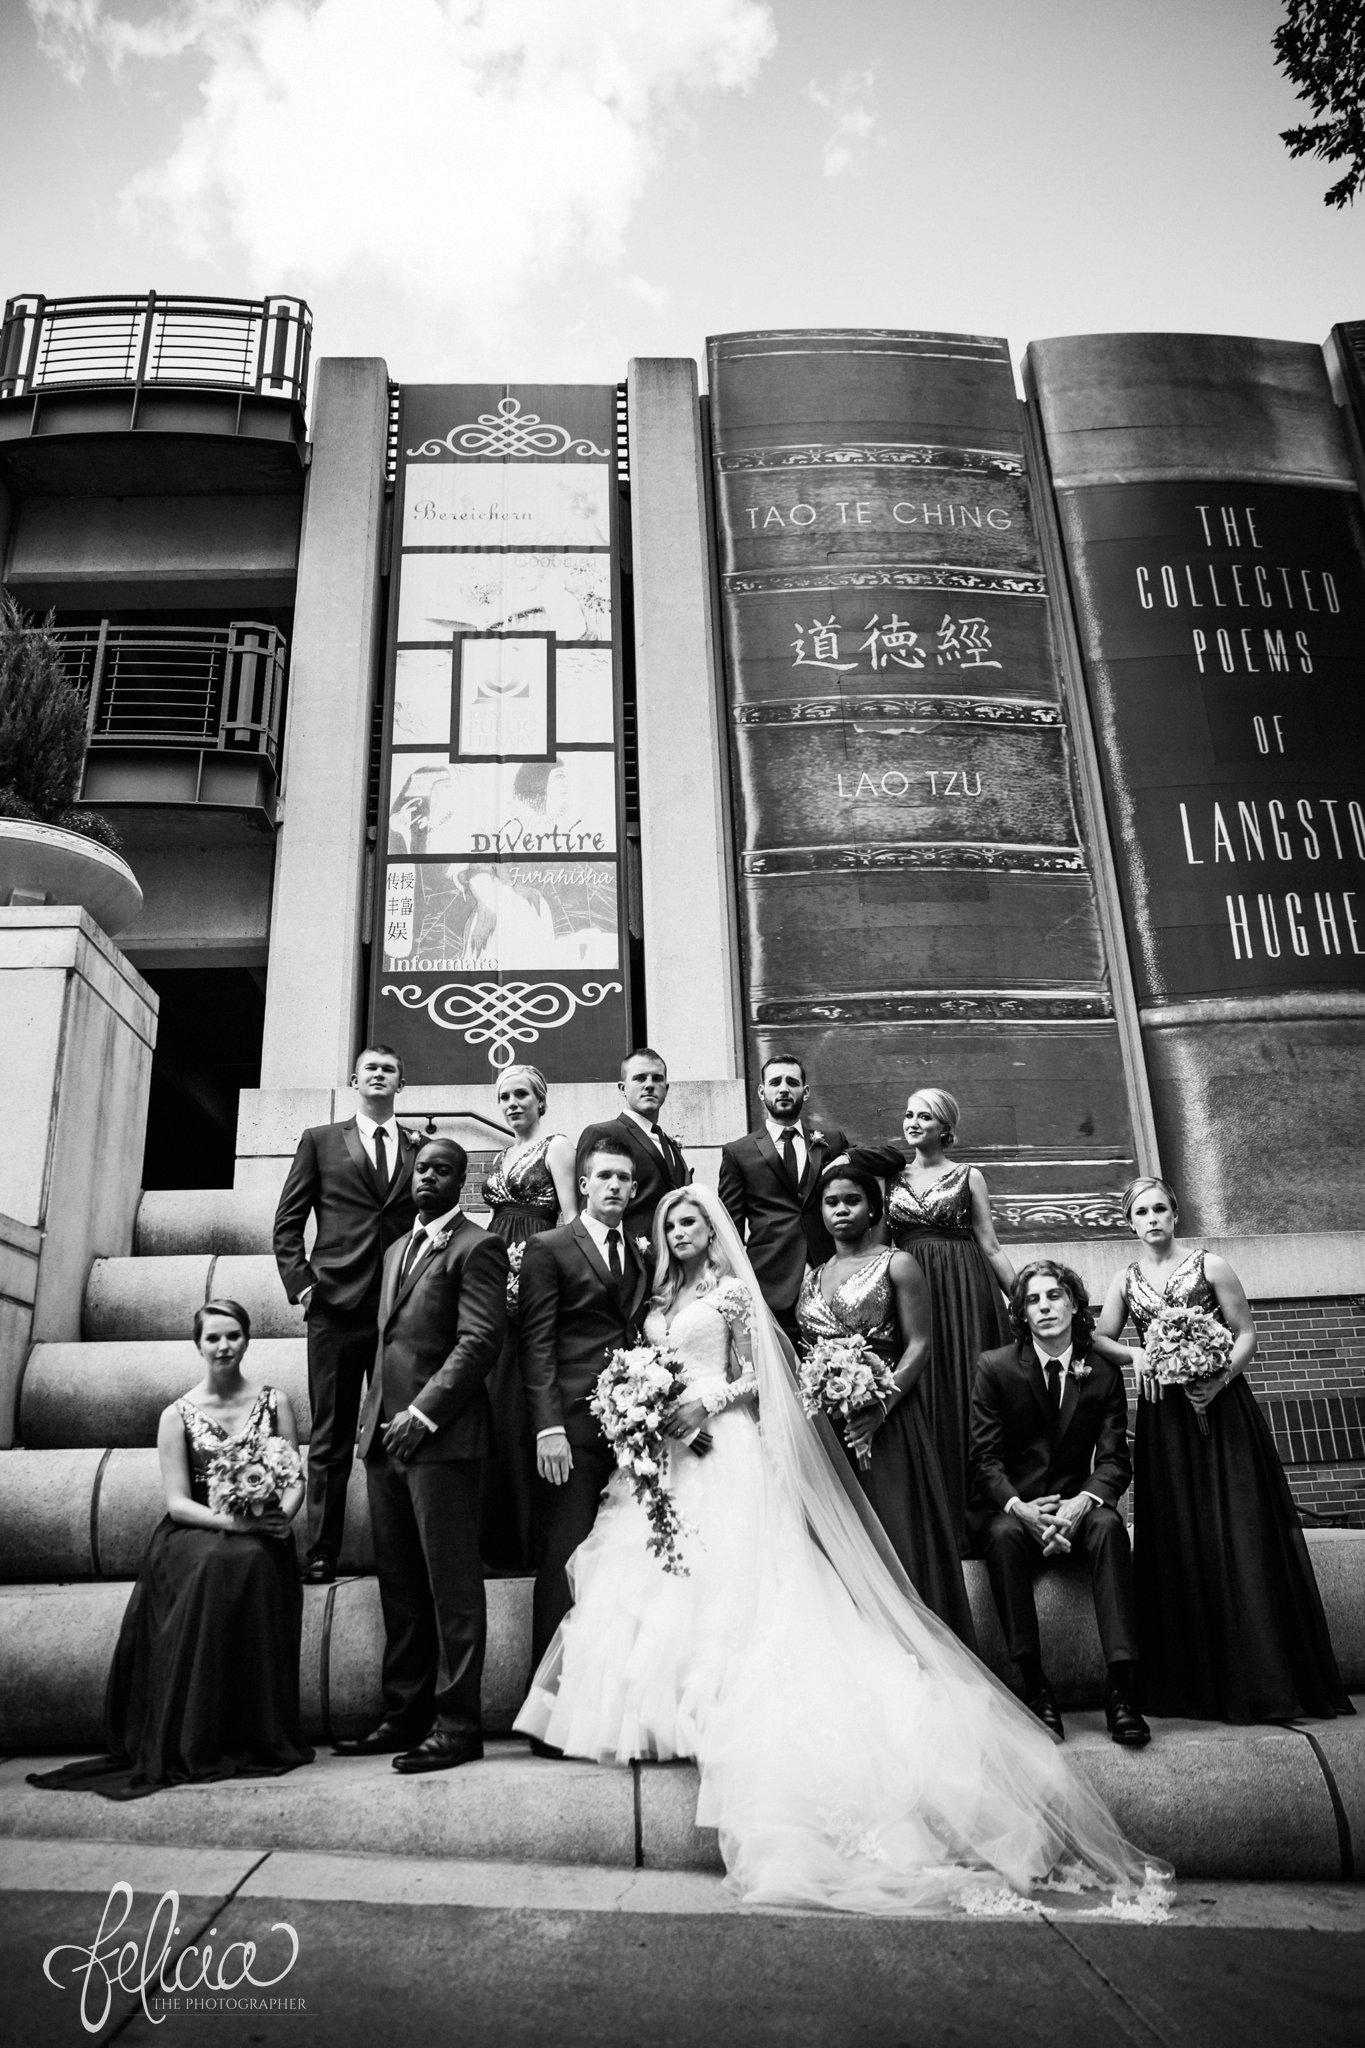 images by feliciathephotographer.com | wedding photographer | kansas city | redemptorist | classic | portrait | bridal party | vanity fair | library | black and white | whimsical | sequins | long train | lace dress | sincere | 